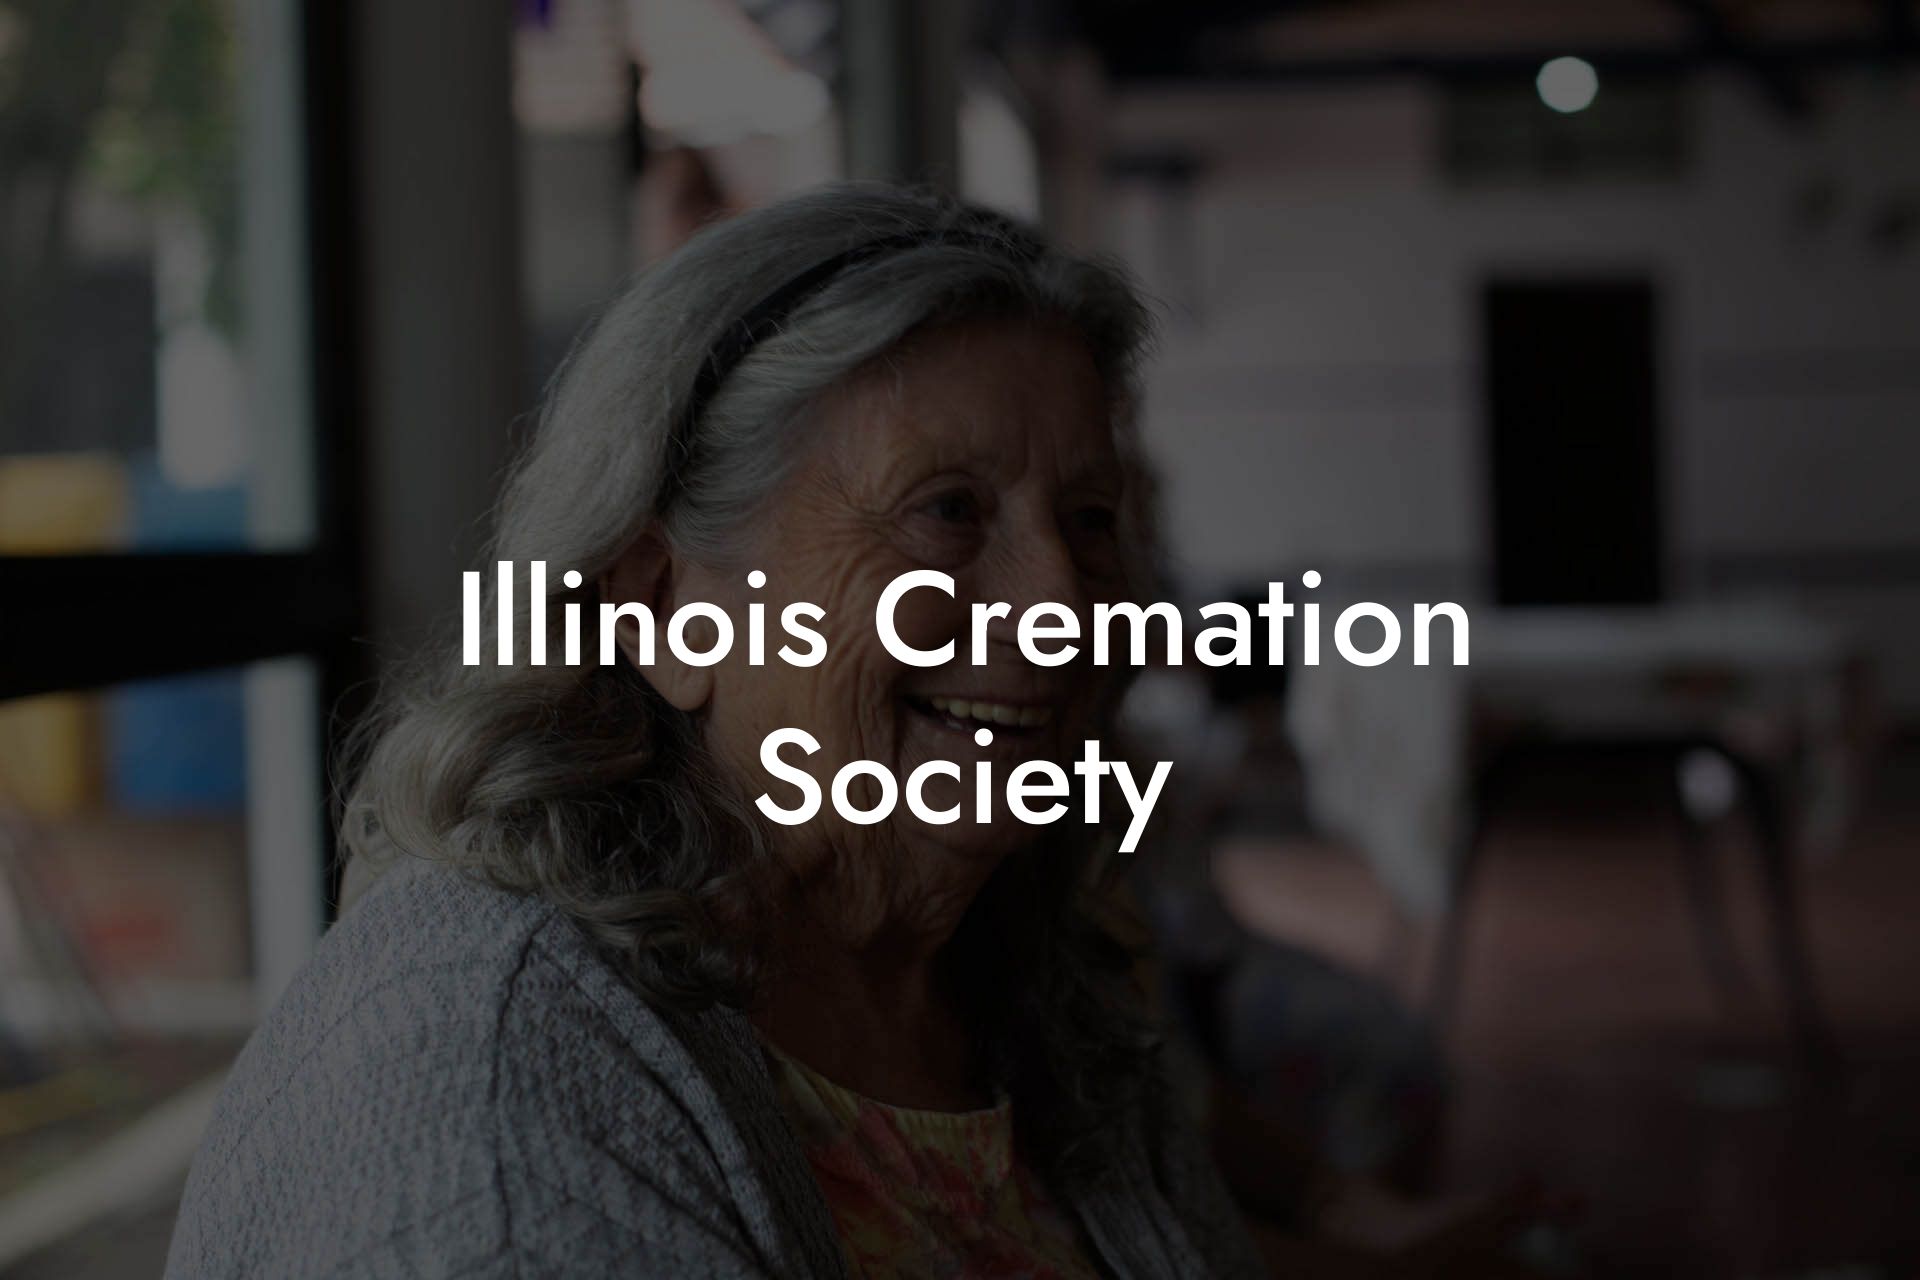 Illinois Cremation Society